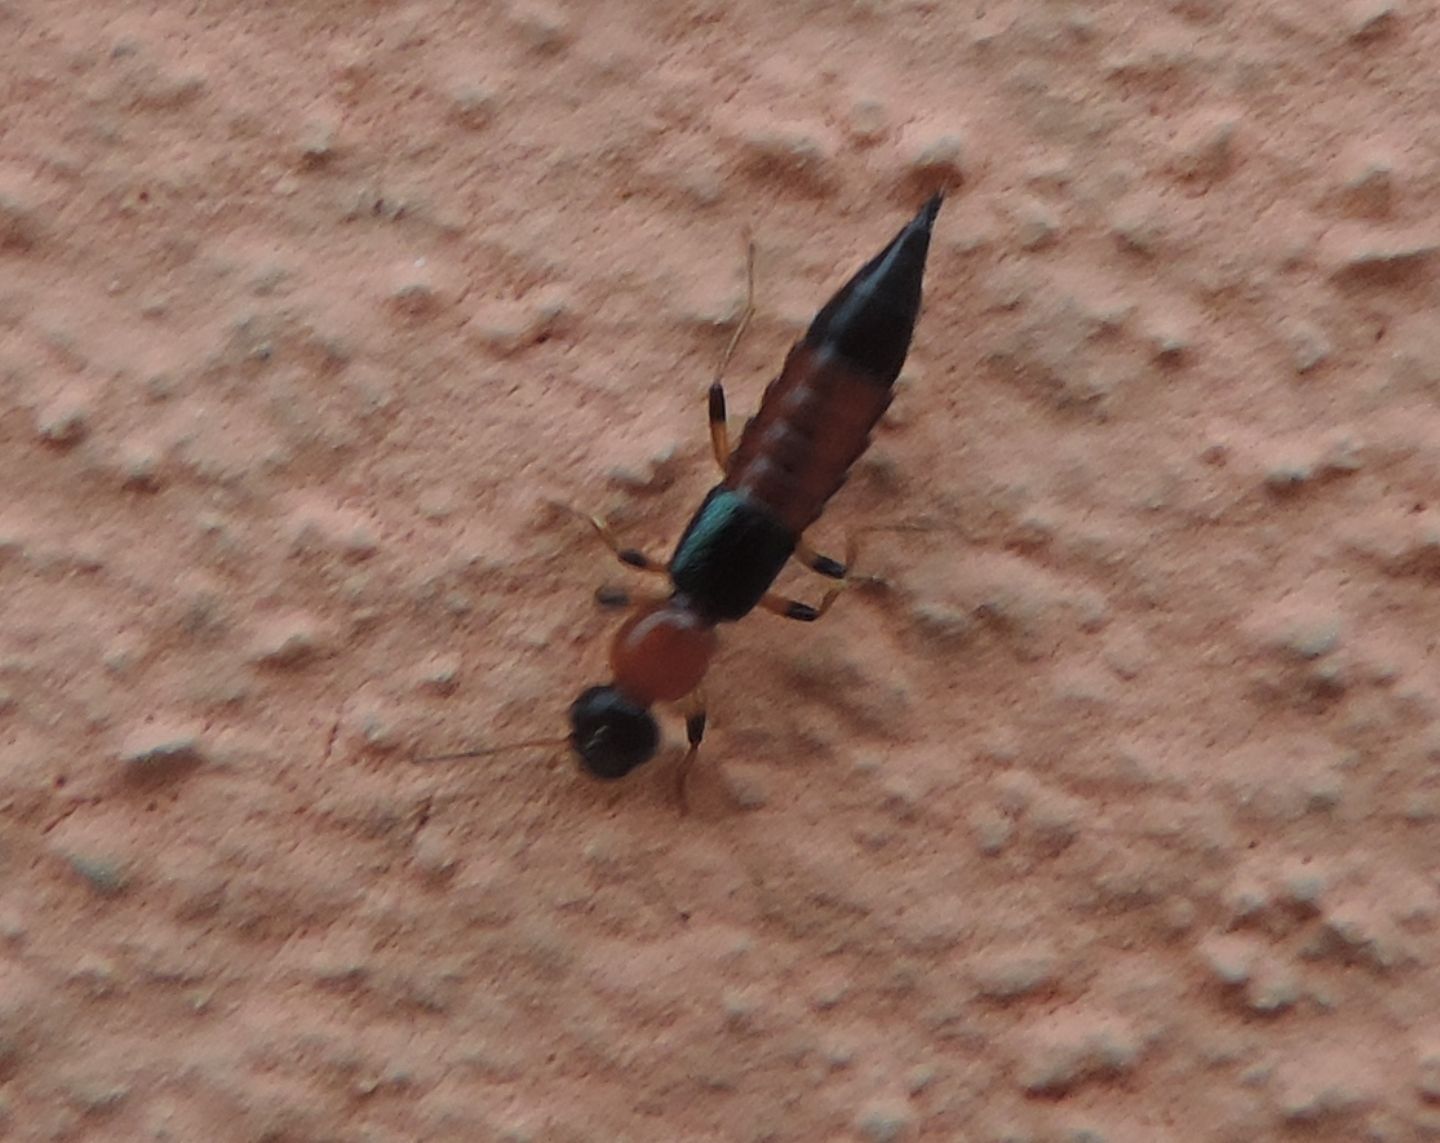 Paederus littoralis, Staphylinidae